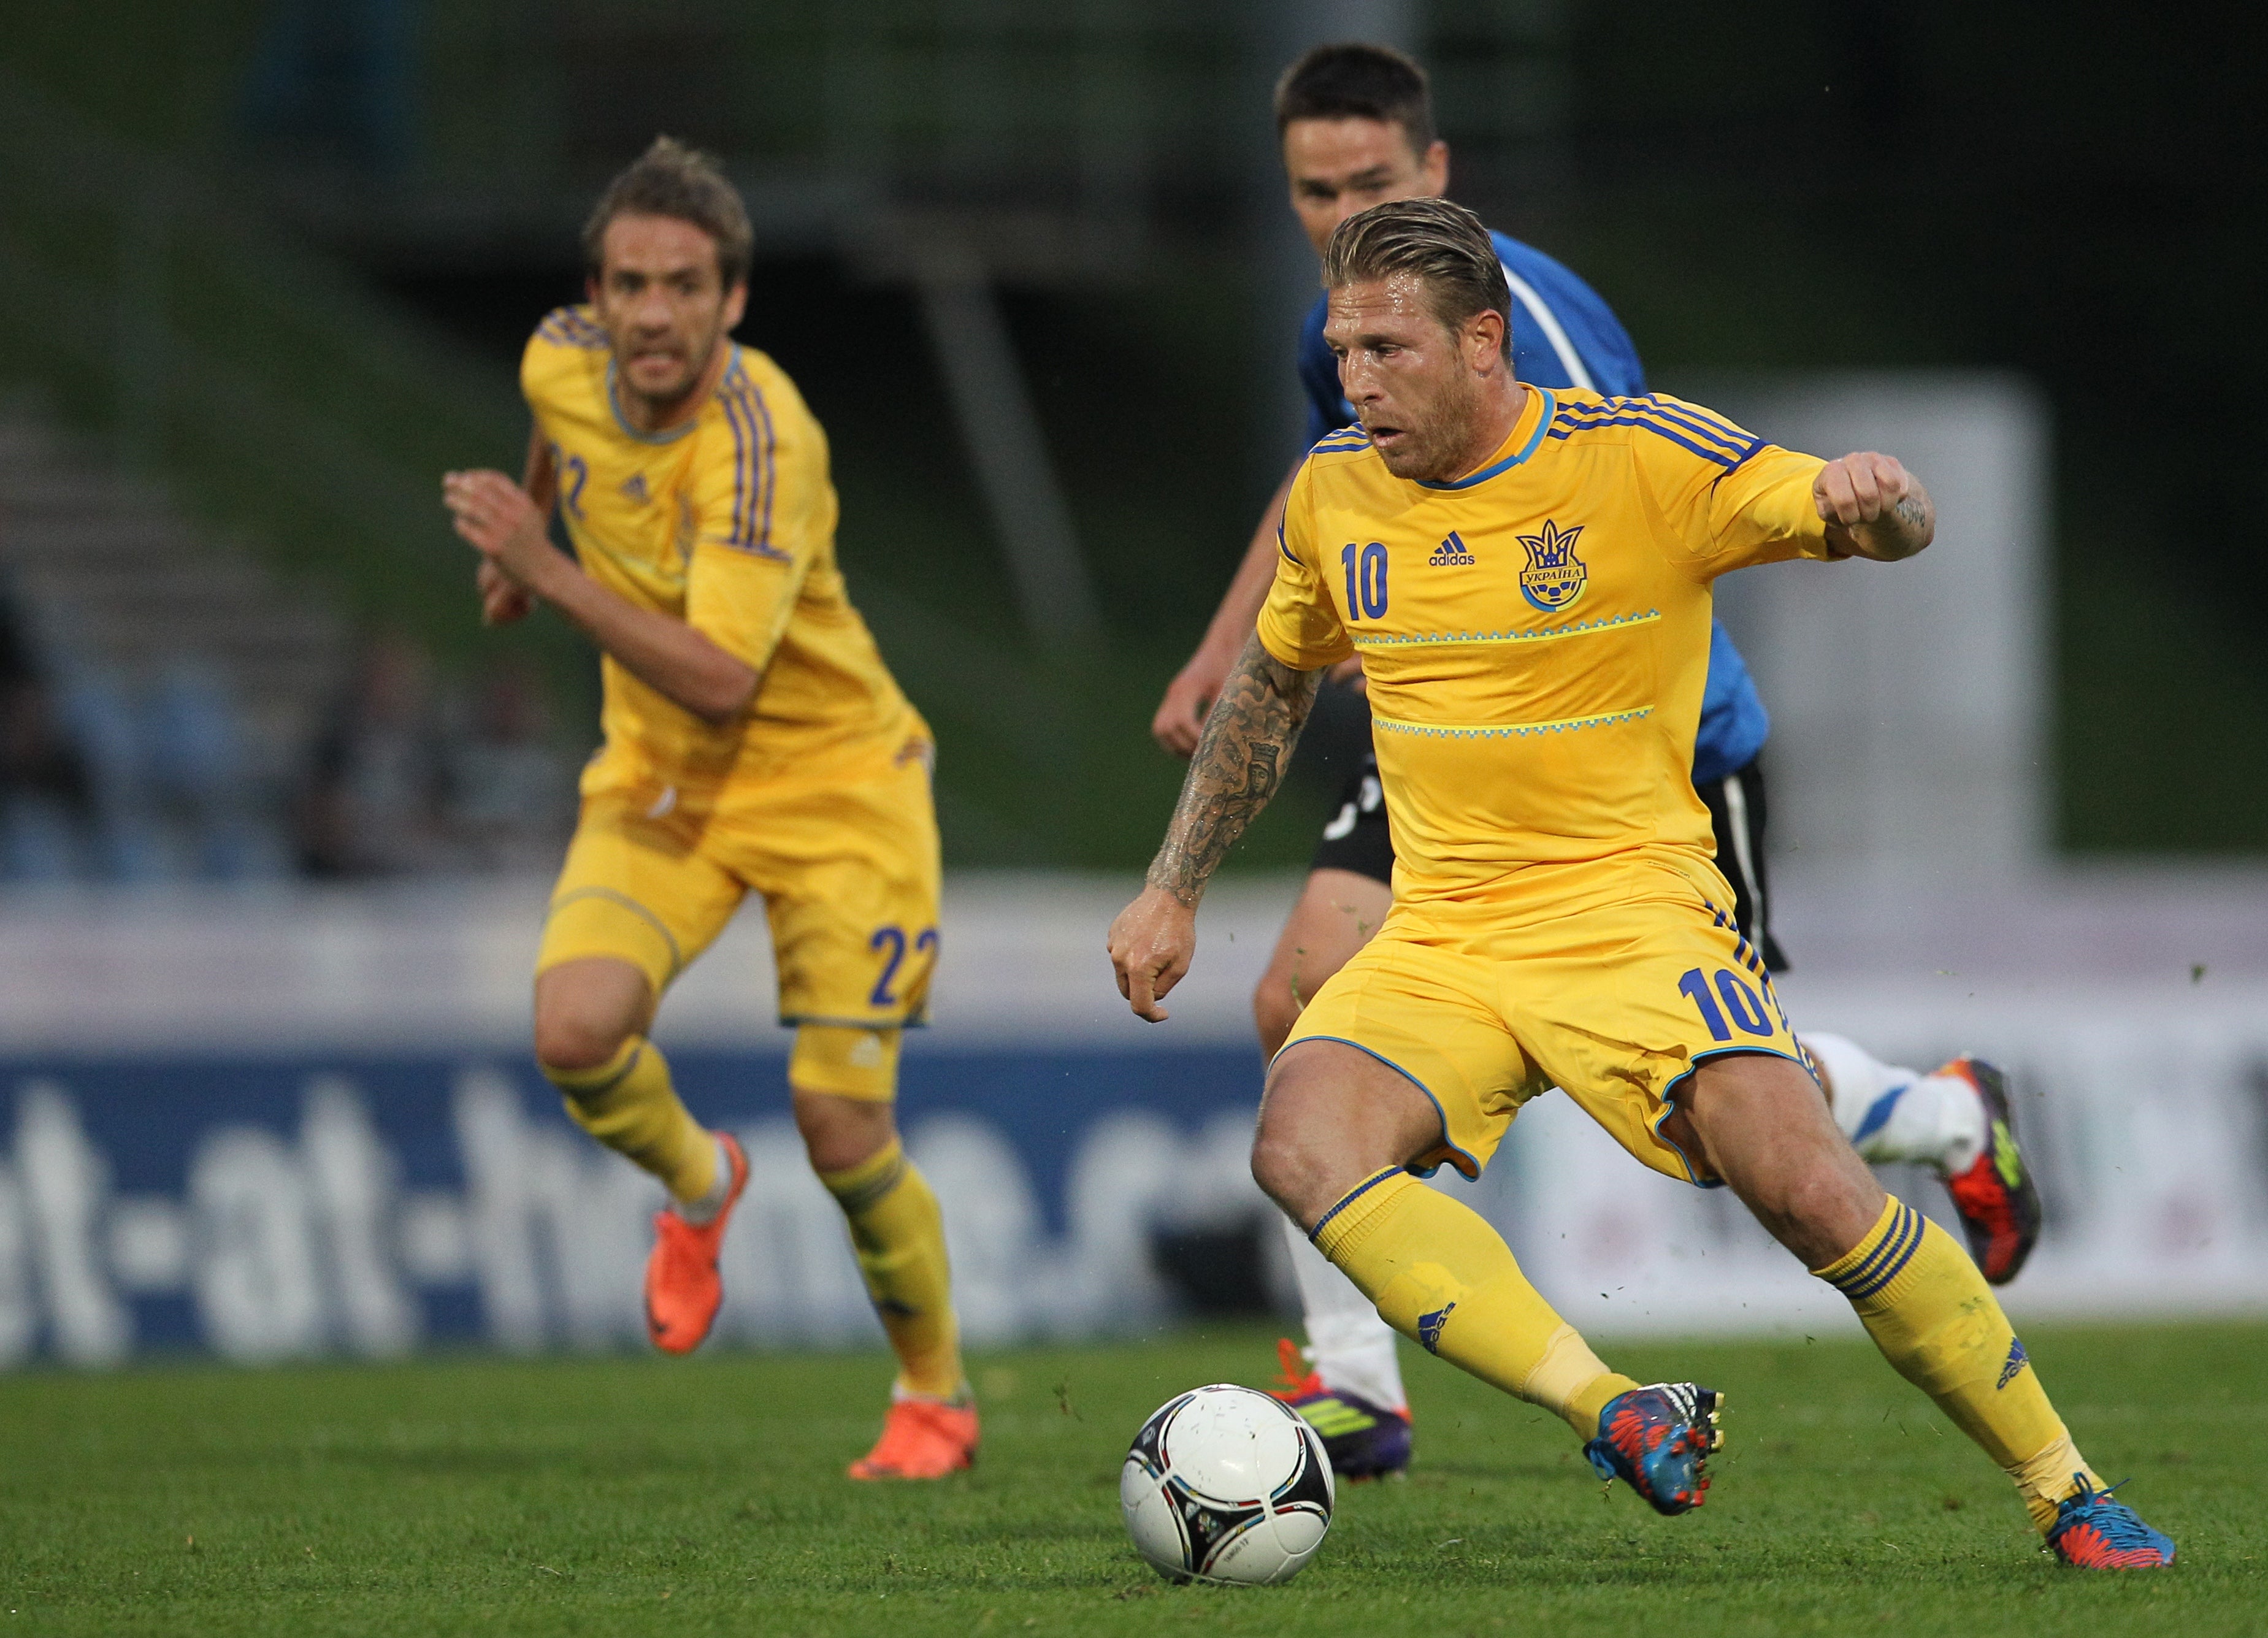 Andriy Voronin made 75 appearances for the Ukraine national team